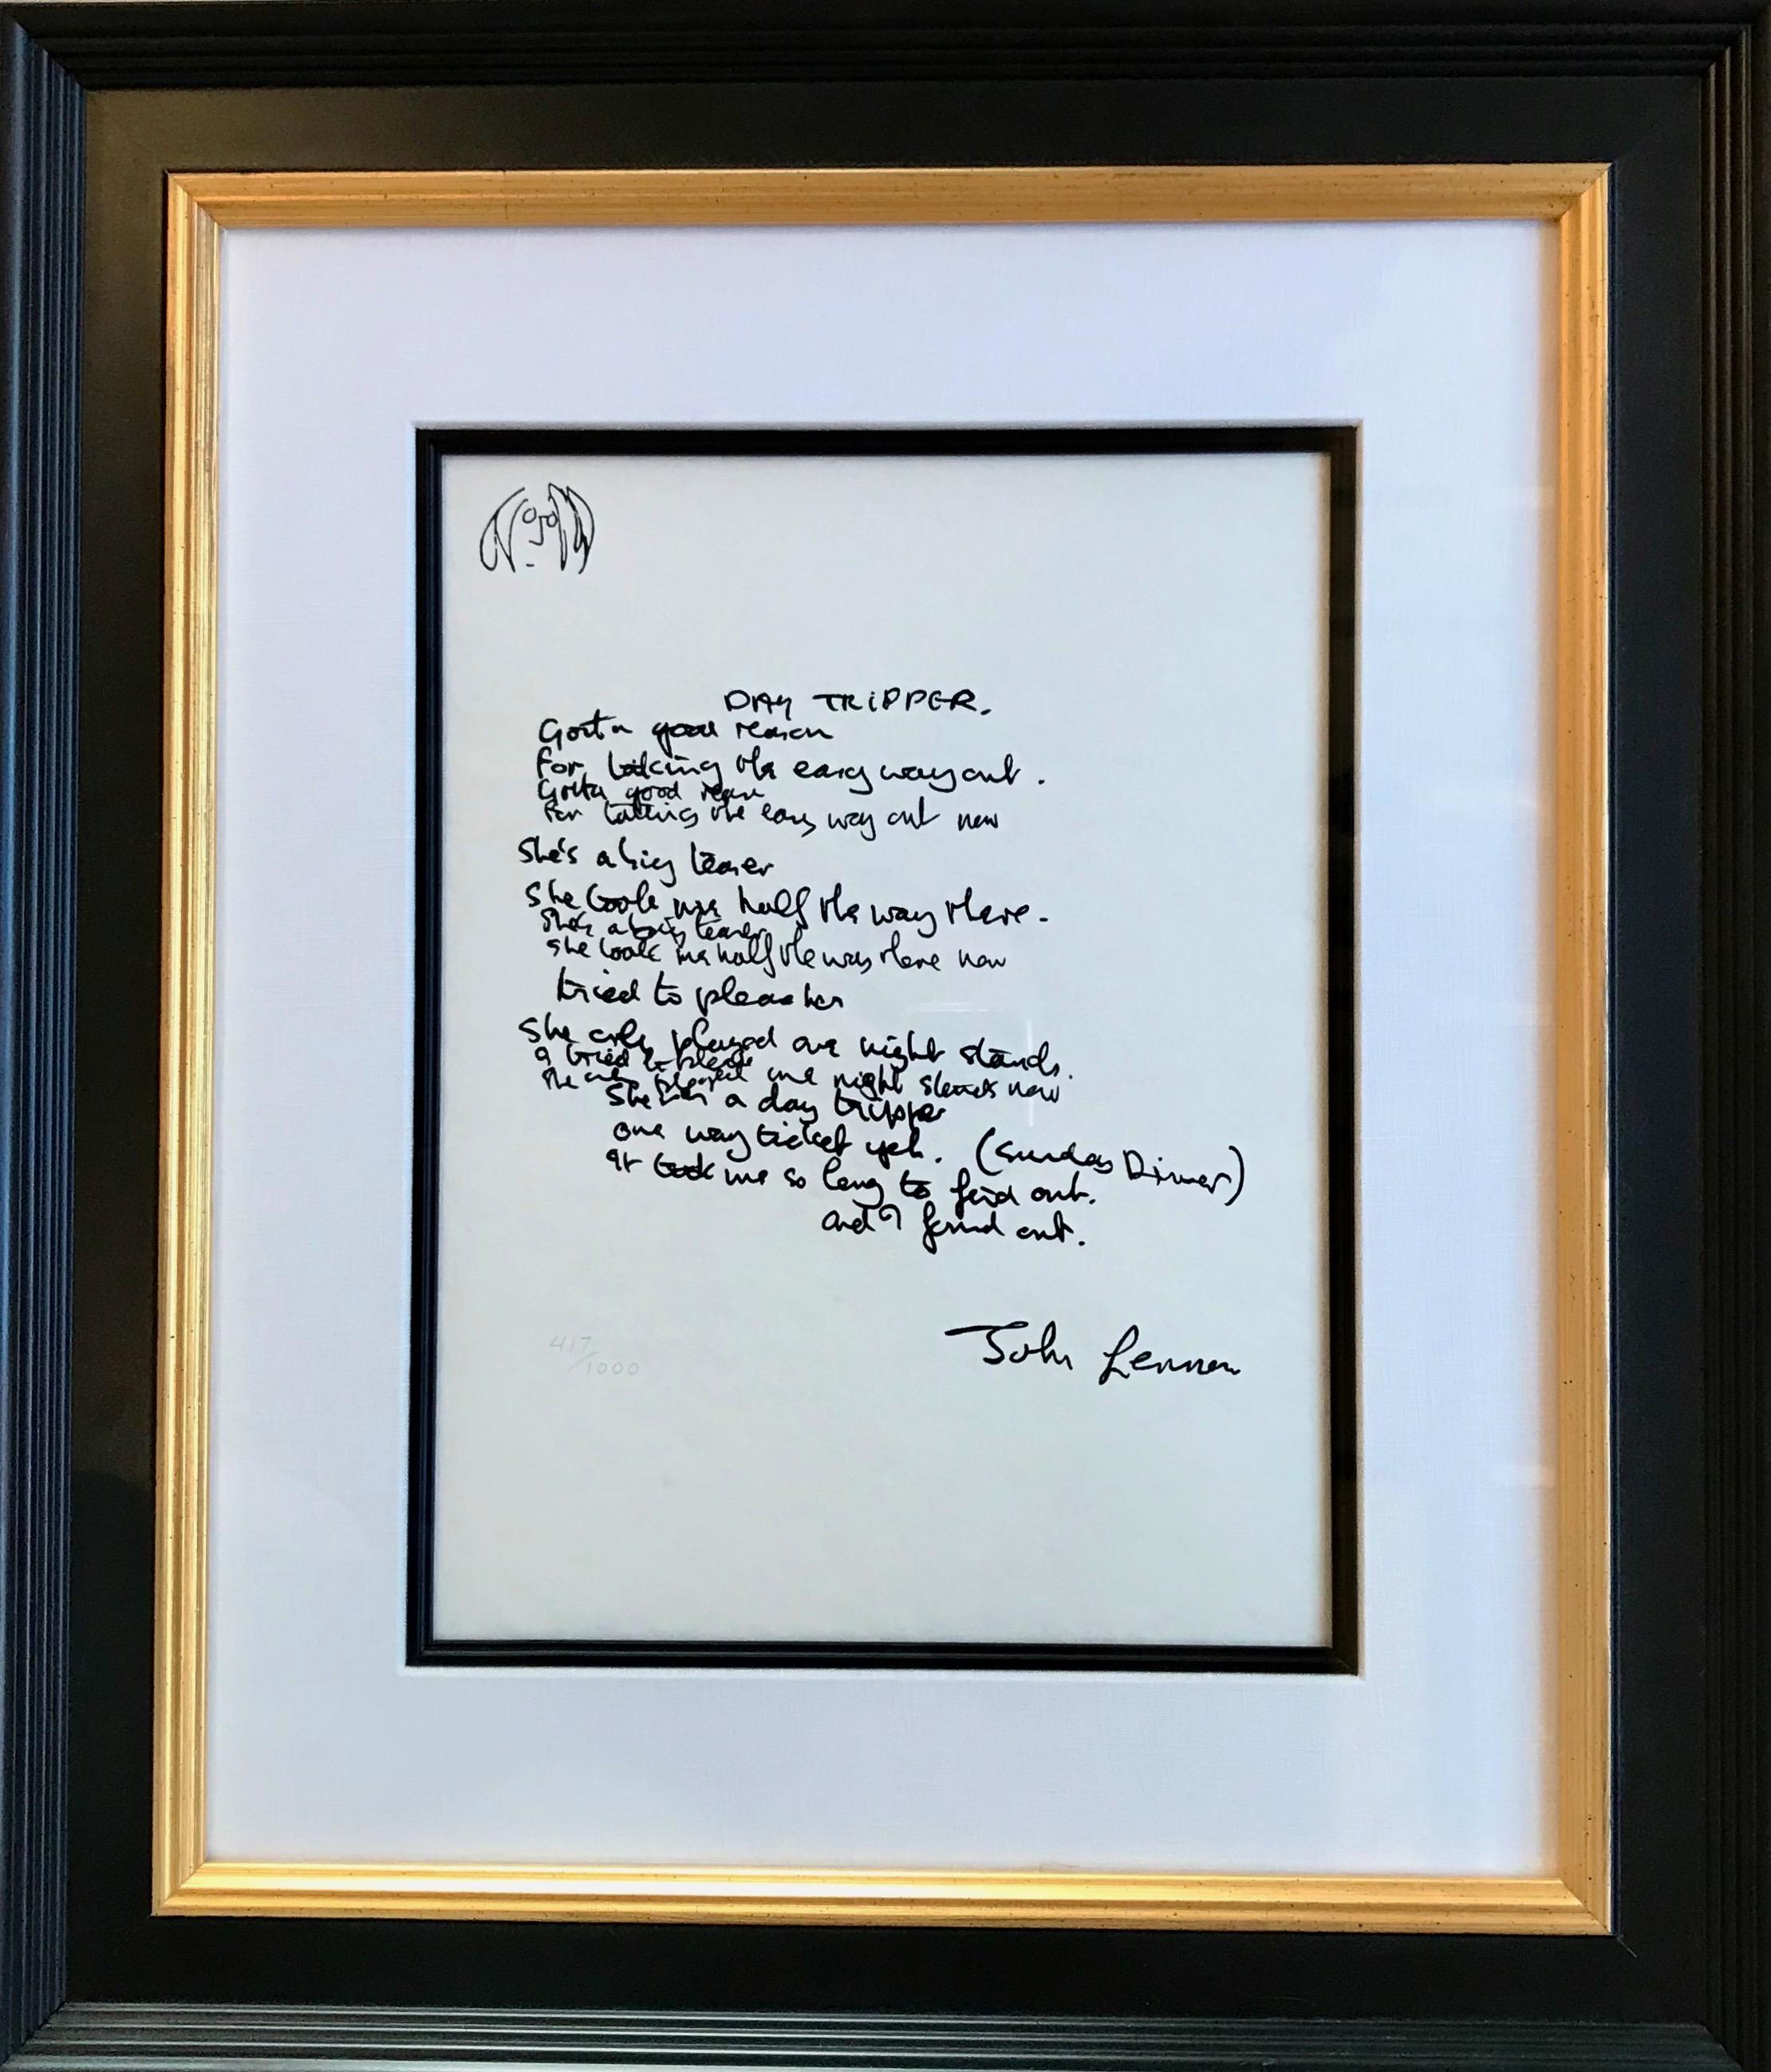 John Lennon Print - "Day Tripper" Limited Edition Hand Written Lyrics